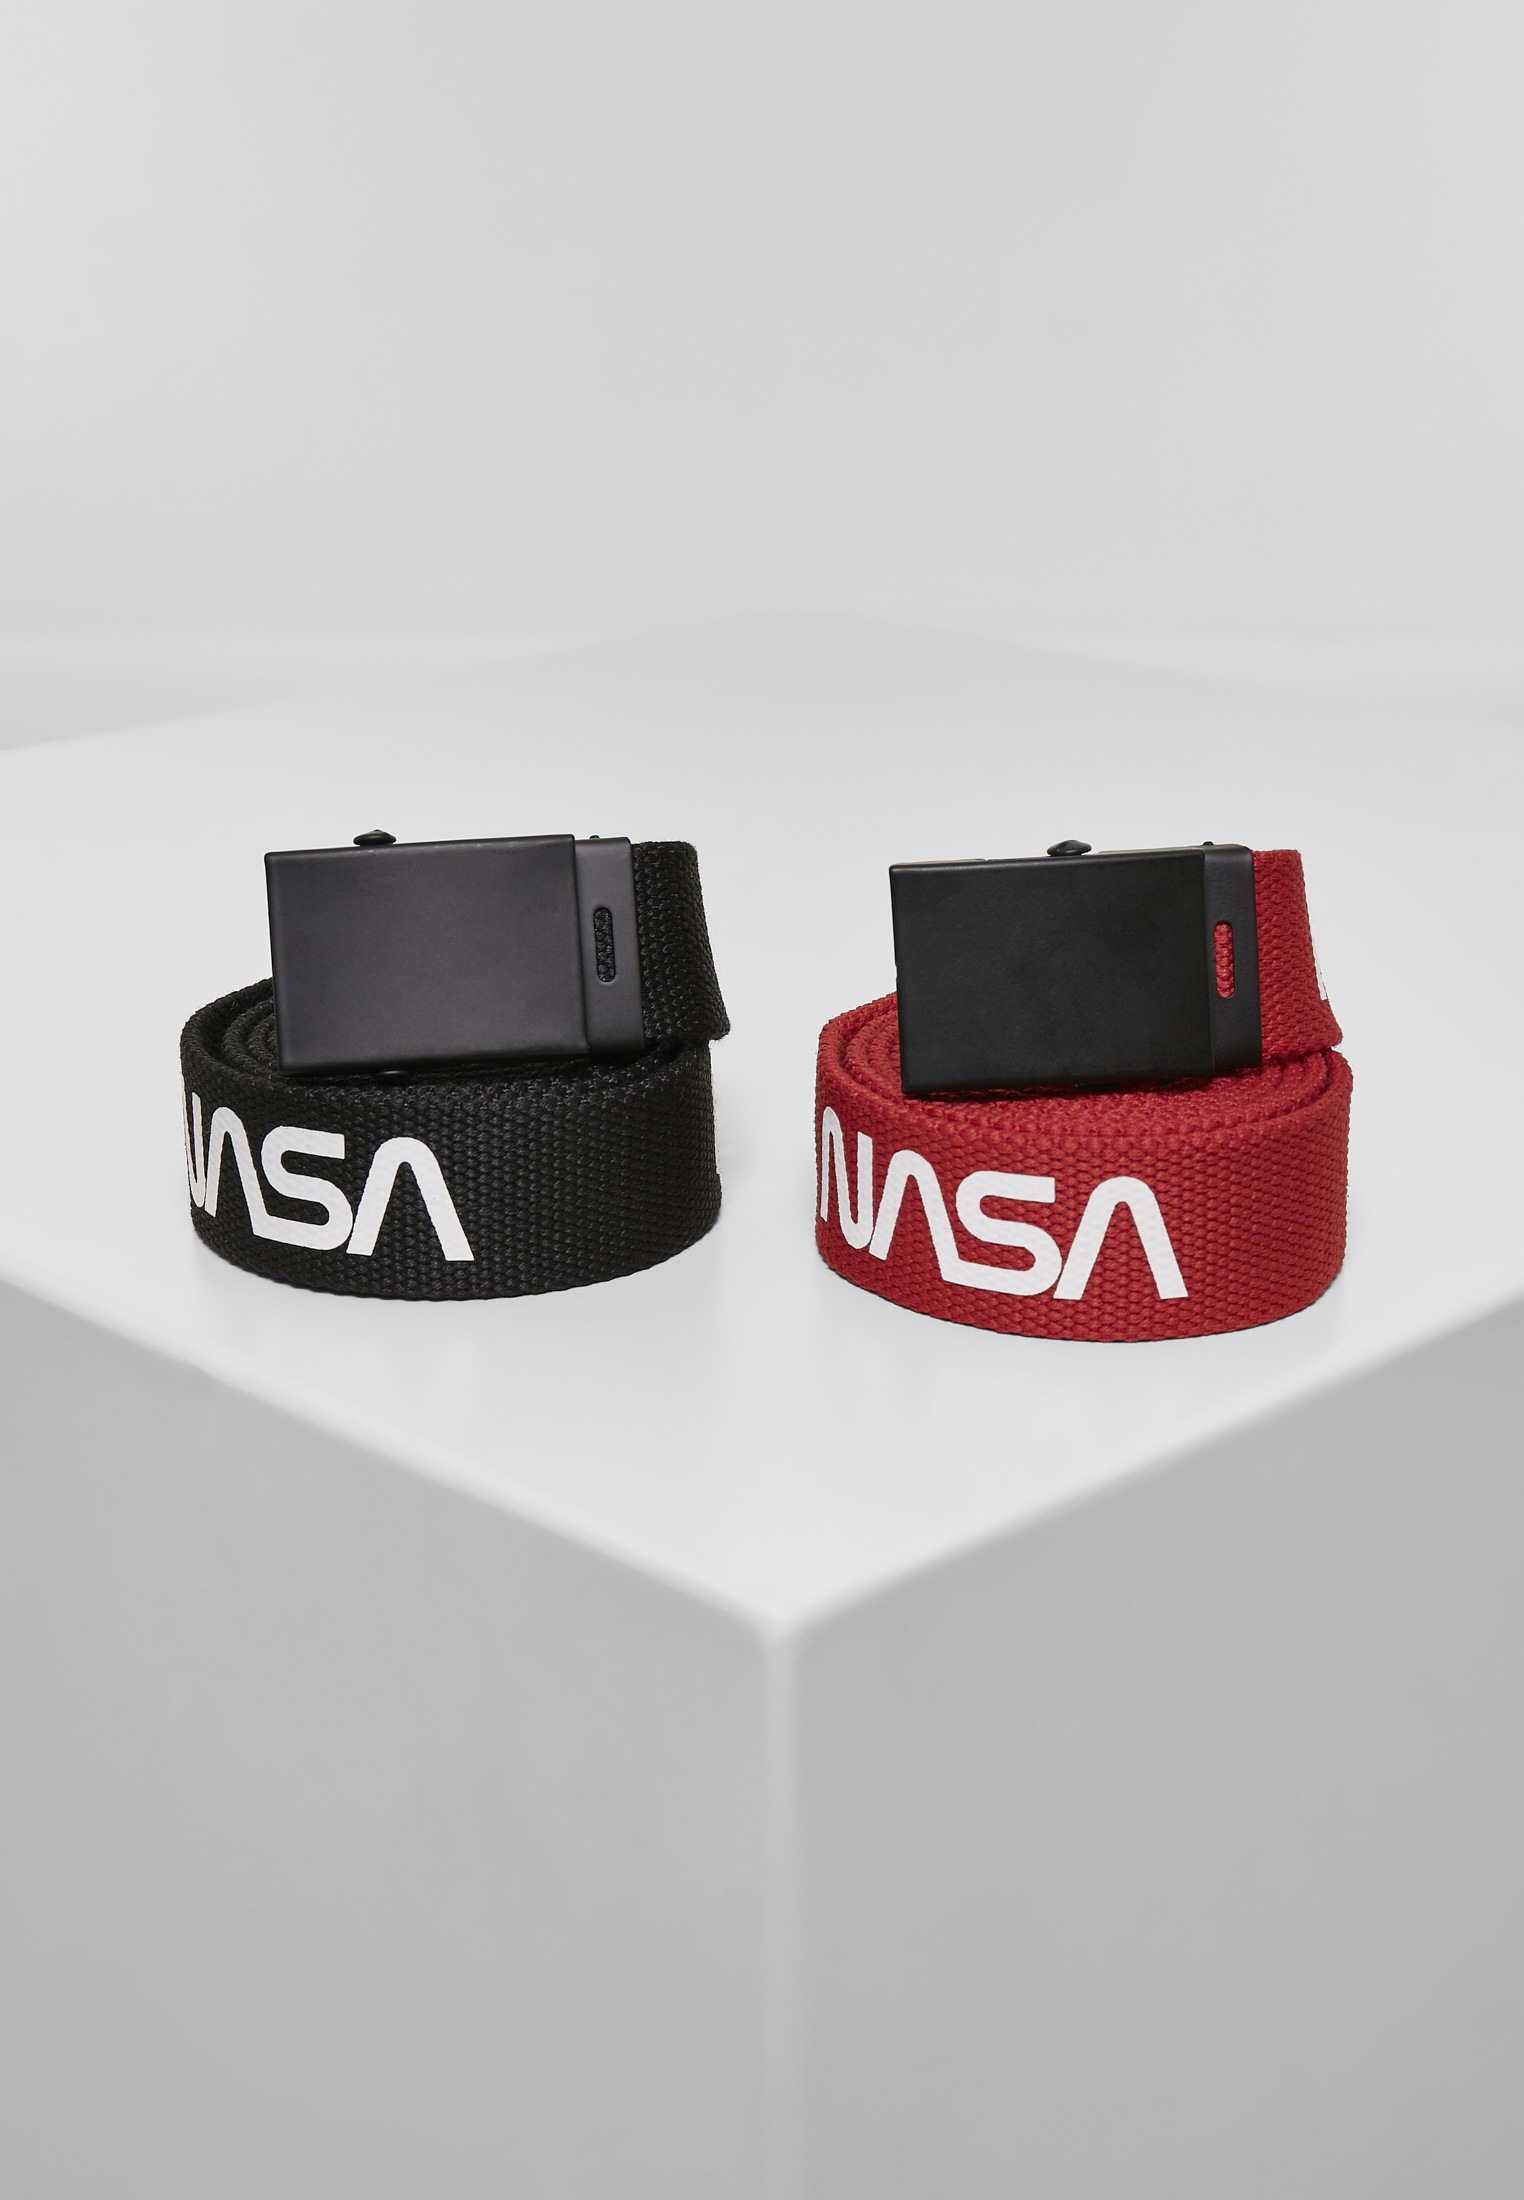 NASA online BAUR 2-Pack Hüftgürtel long« | MisterTee extra »Accessoires Belt kaufen